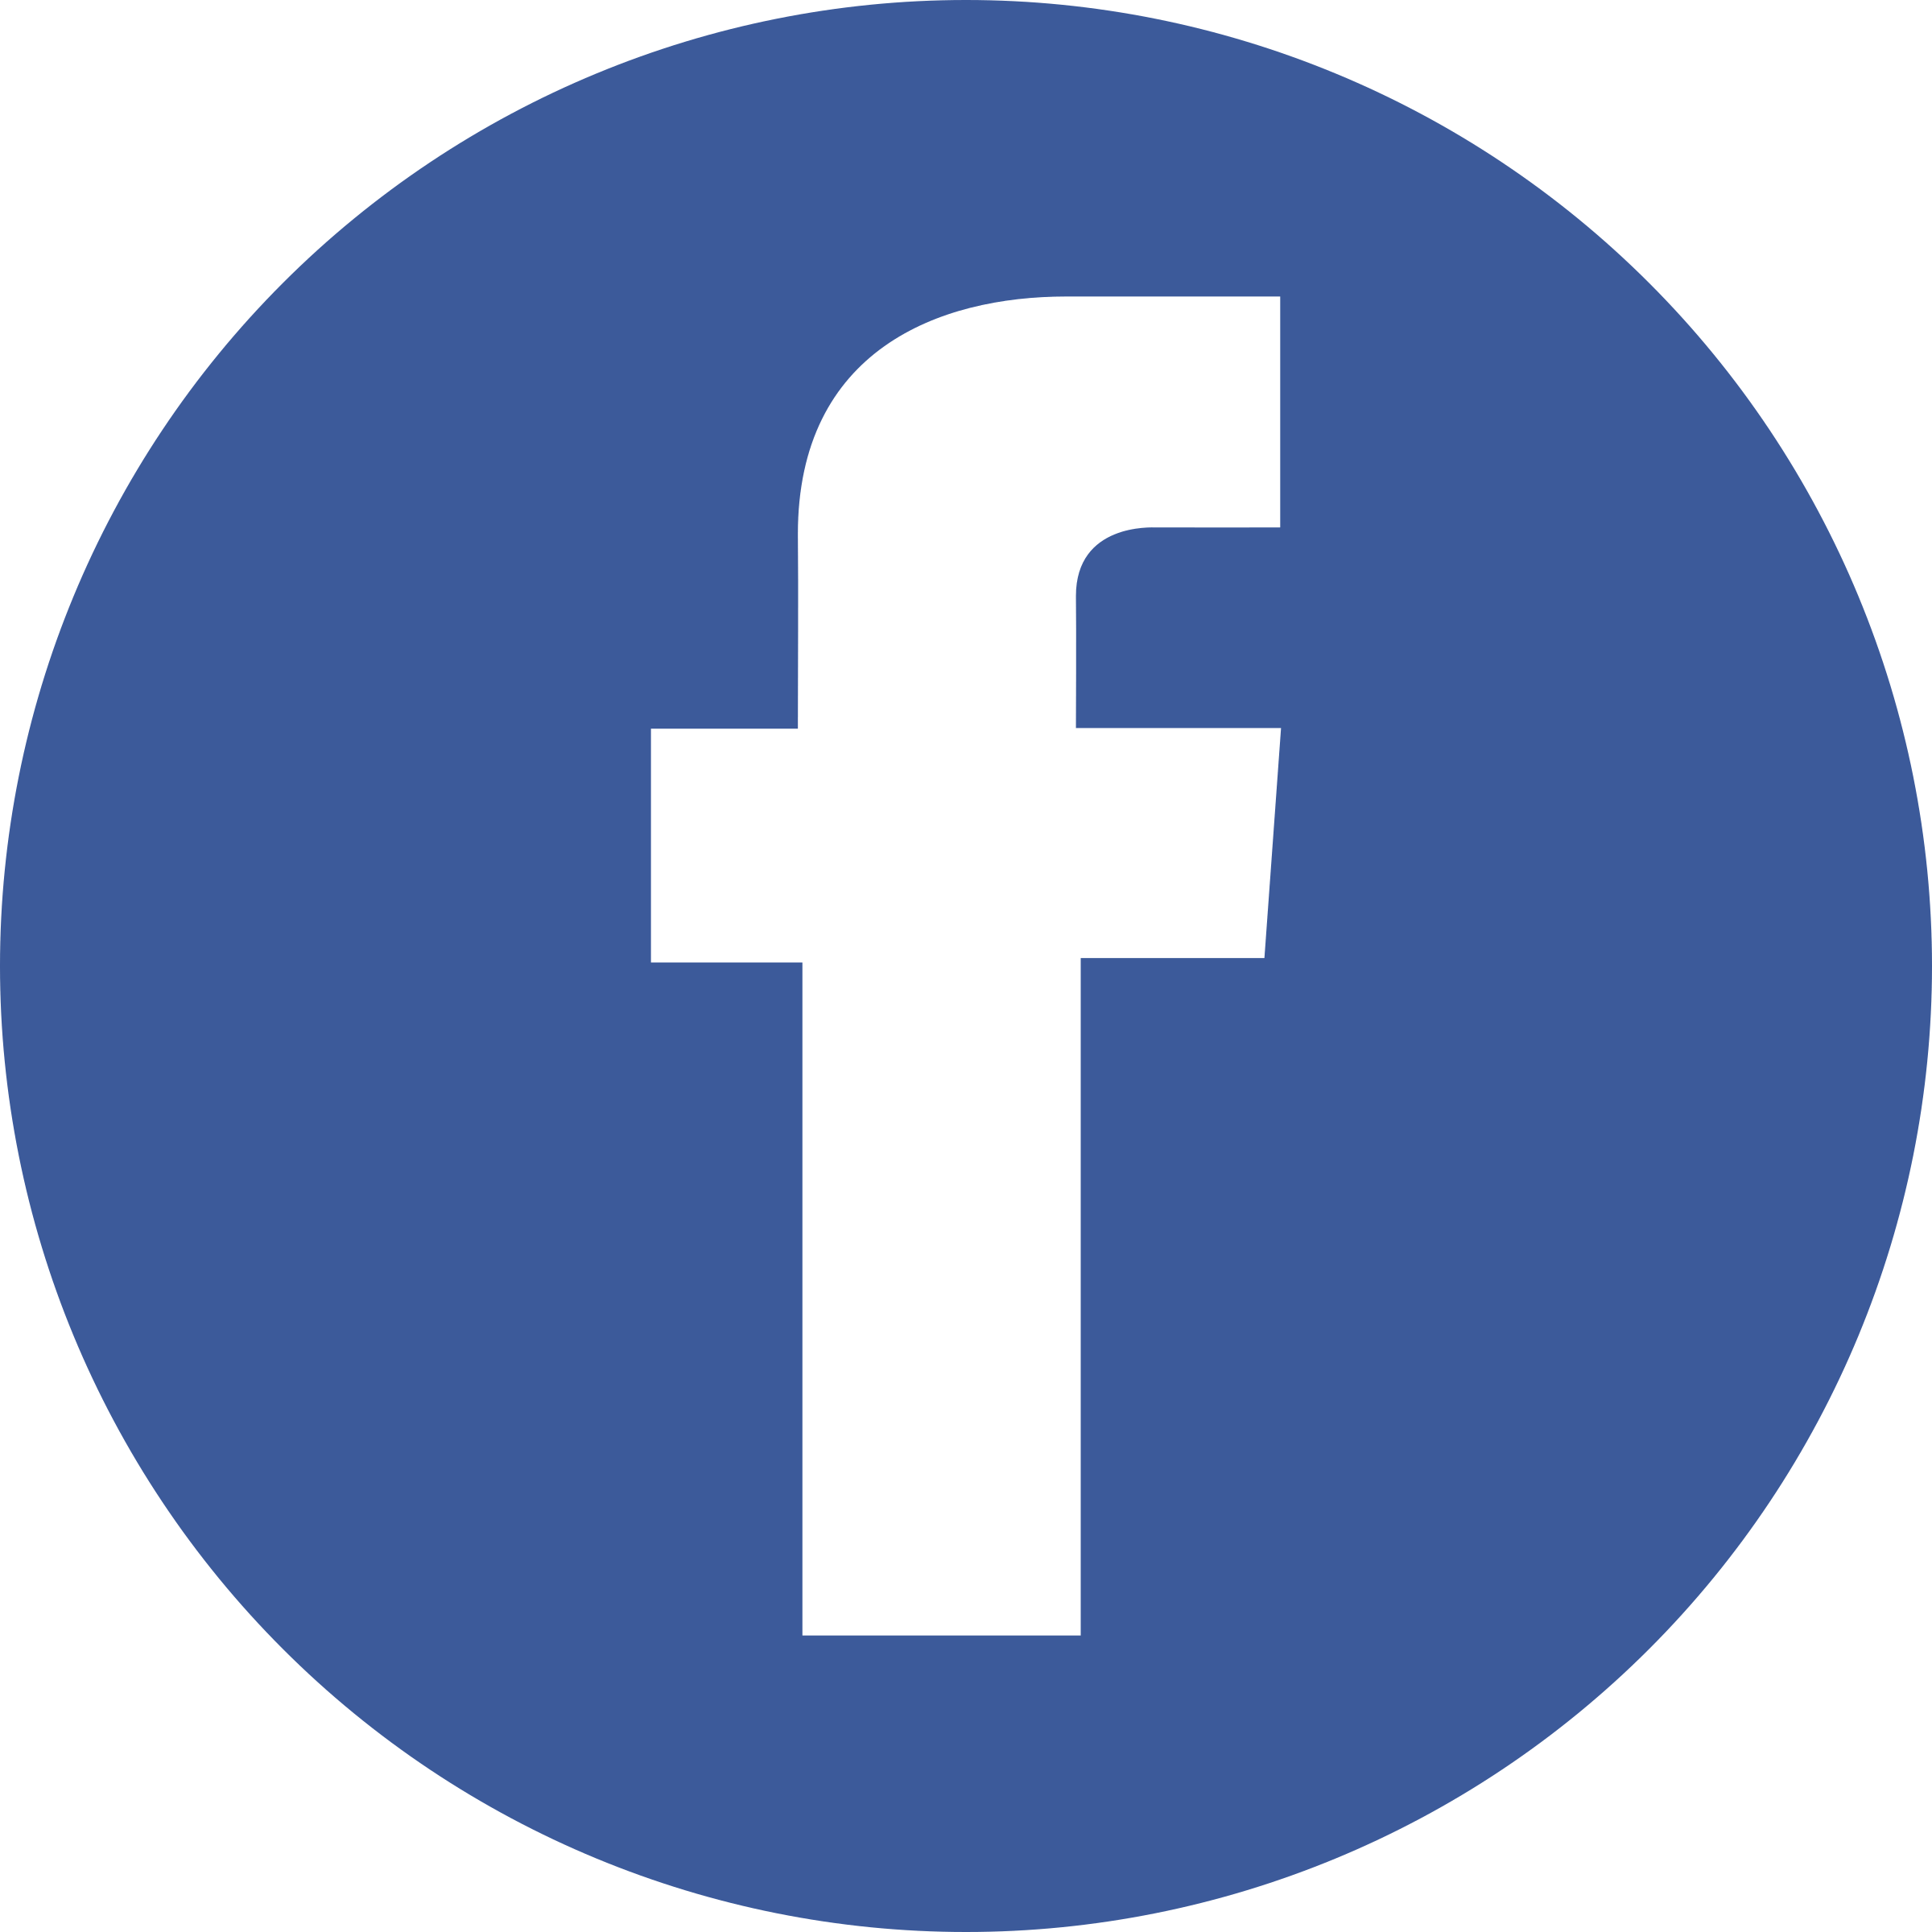 Fecabook Logo - Facebook Logo PNG Transparent & SVG Vector - Freebie Supply